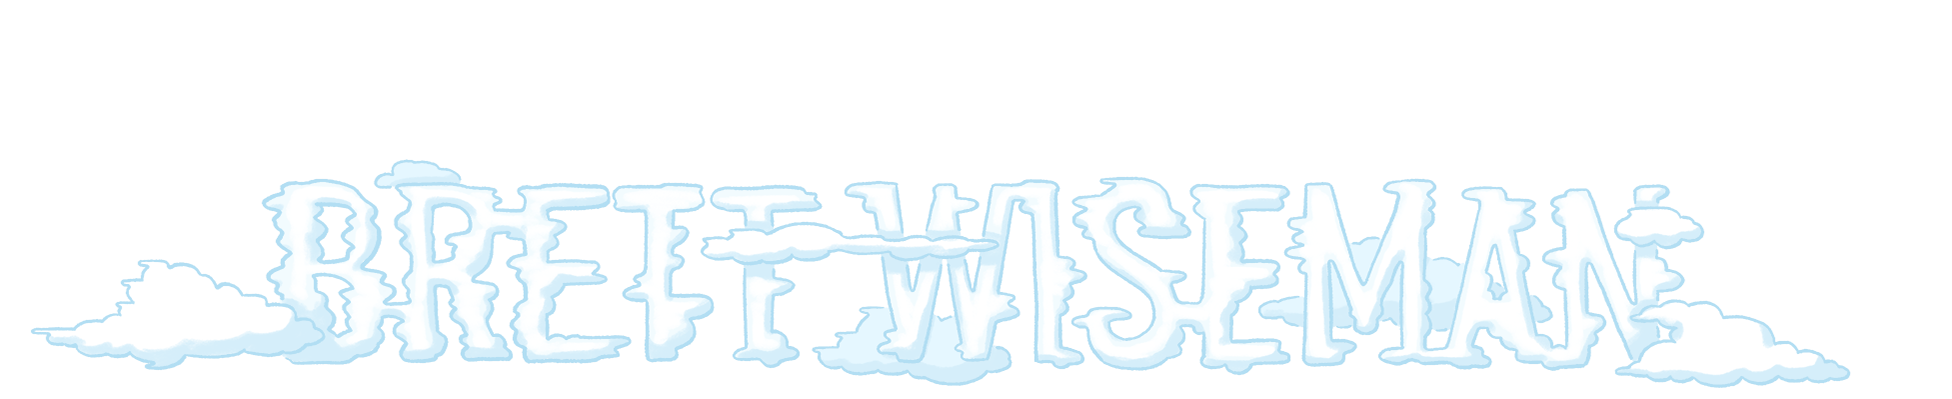 Brett Wiseman logo as illustrated clouds